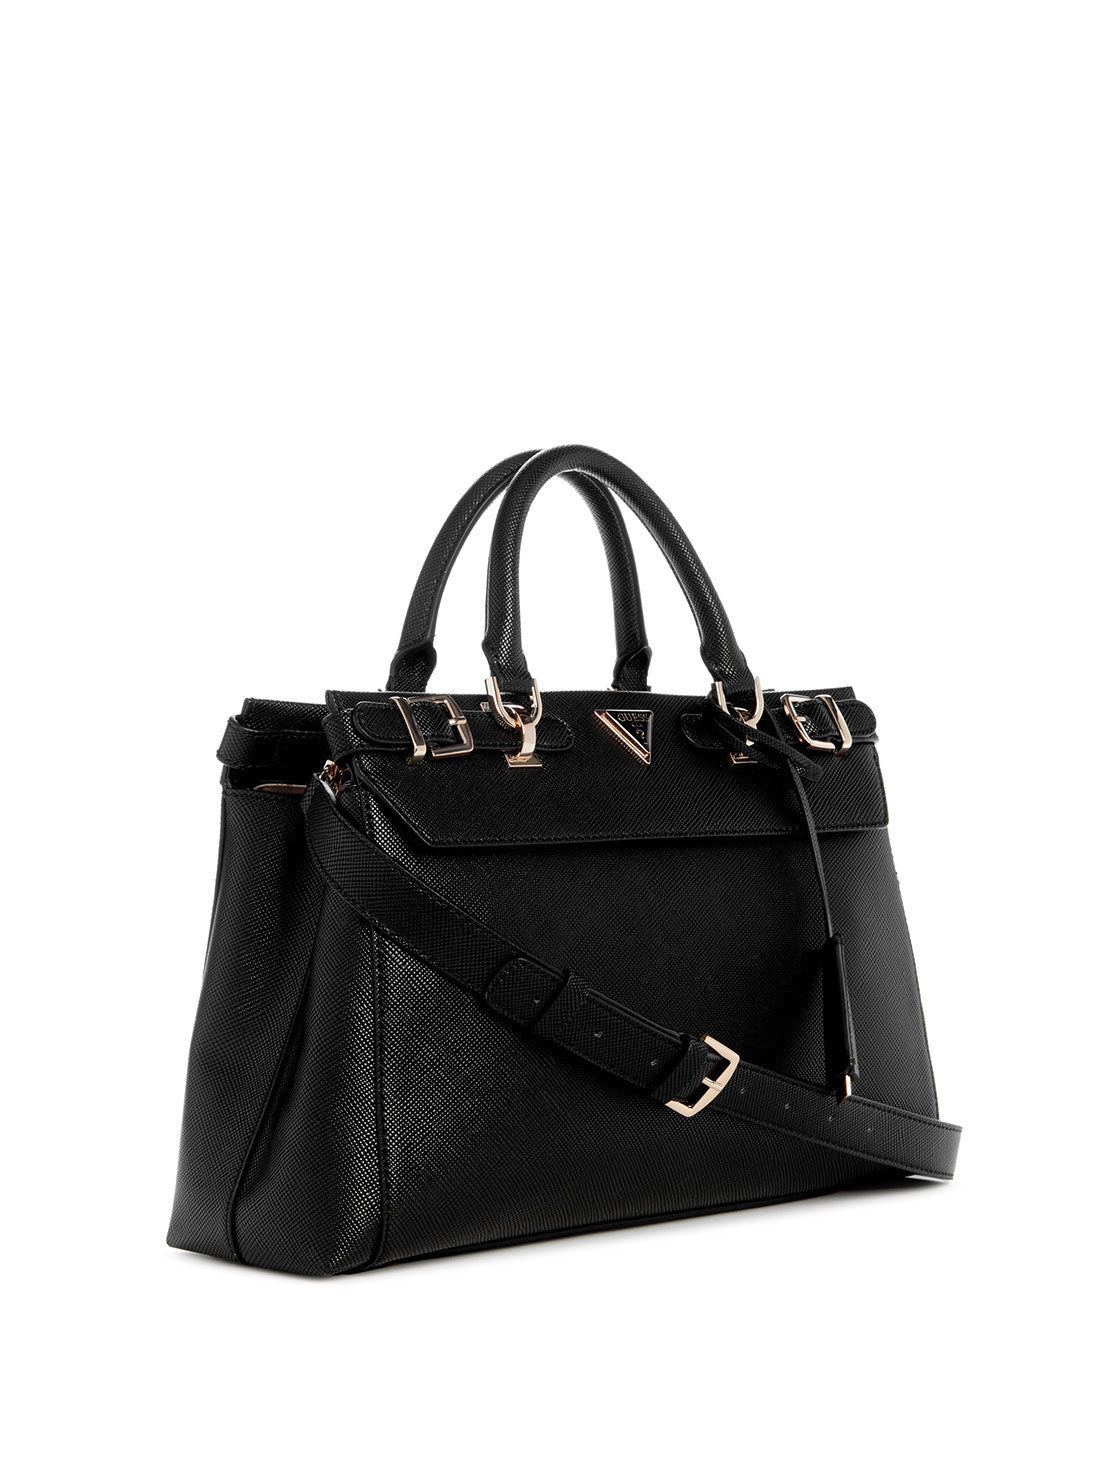 GUESS Black Levante Luxury Satchel Bag side view